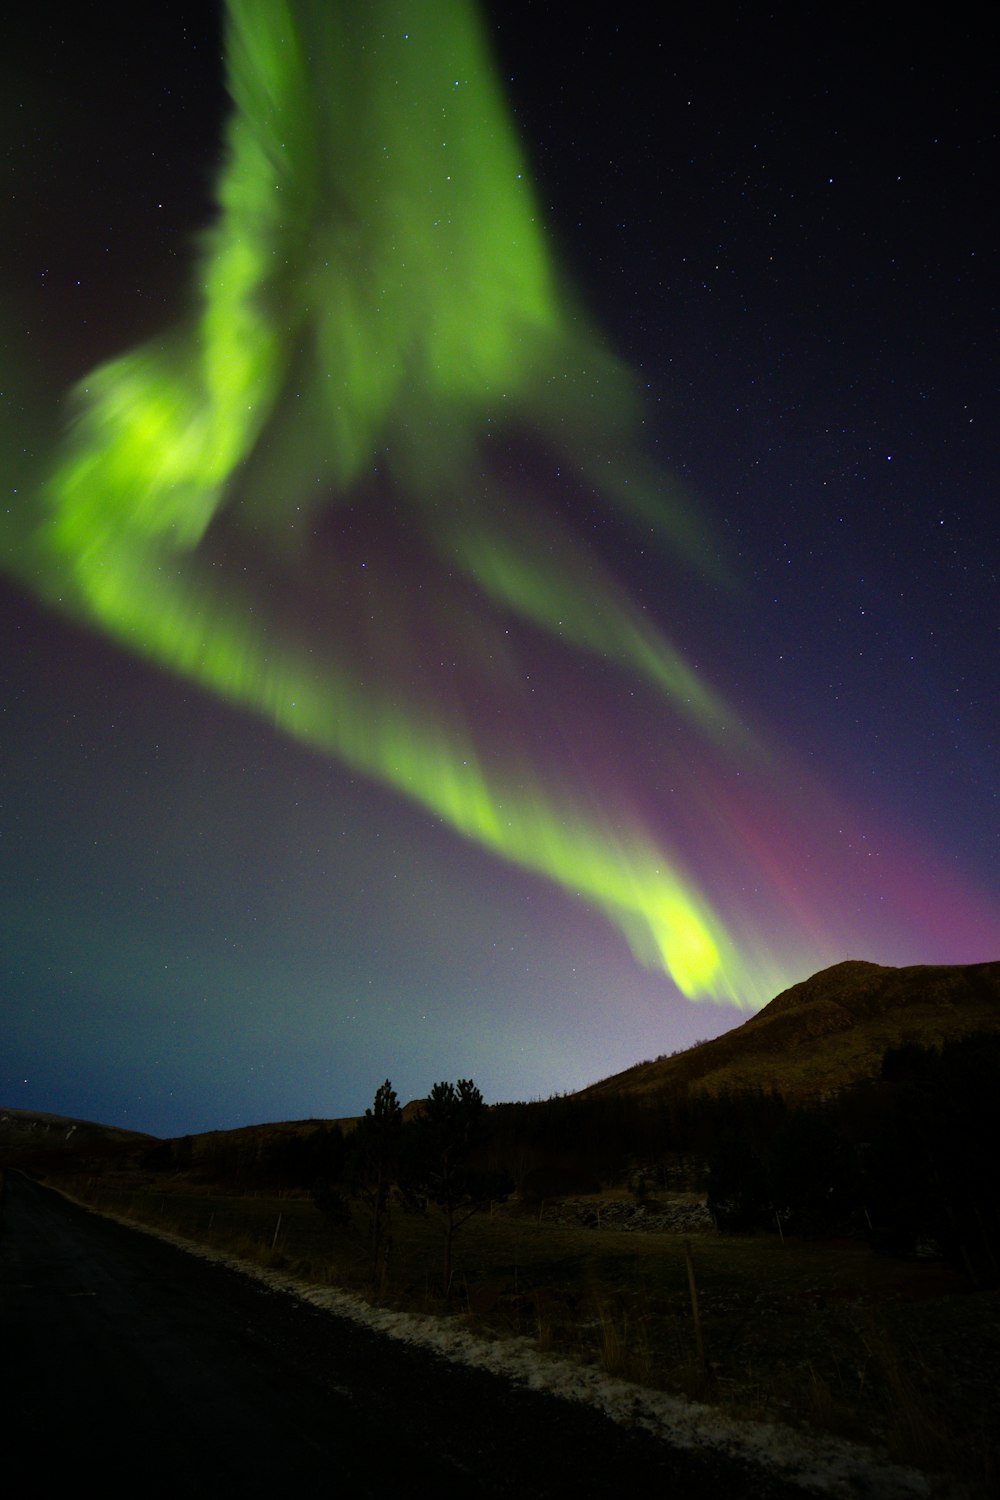 a green and purple aurora bore in the night sky